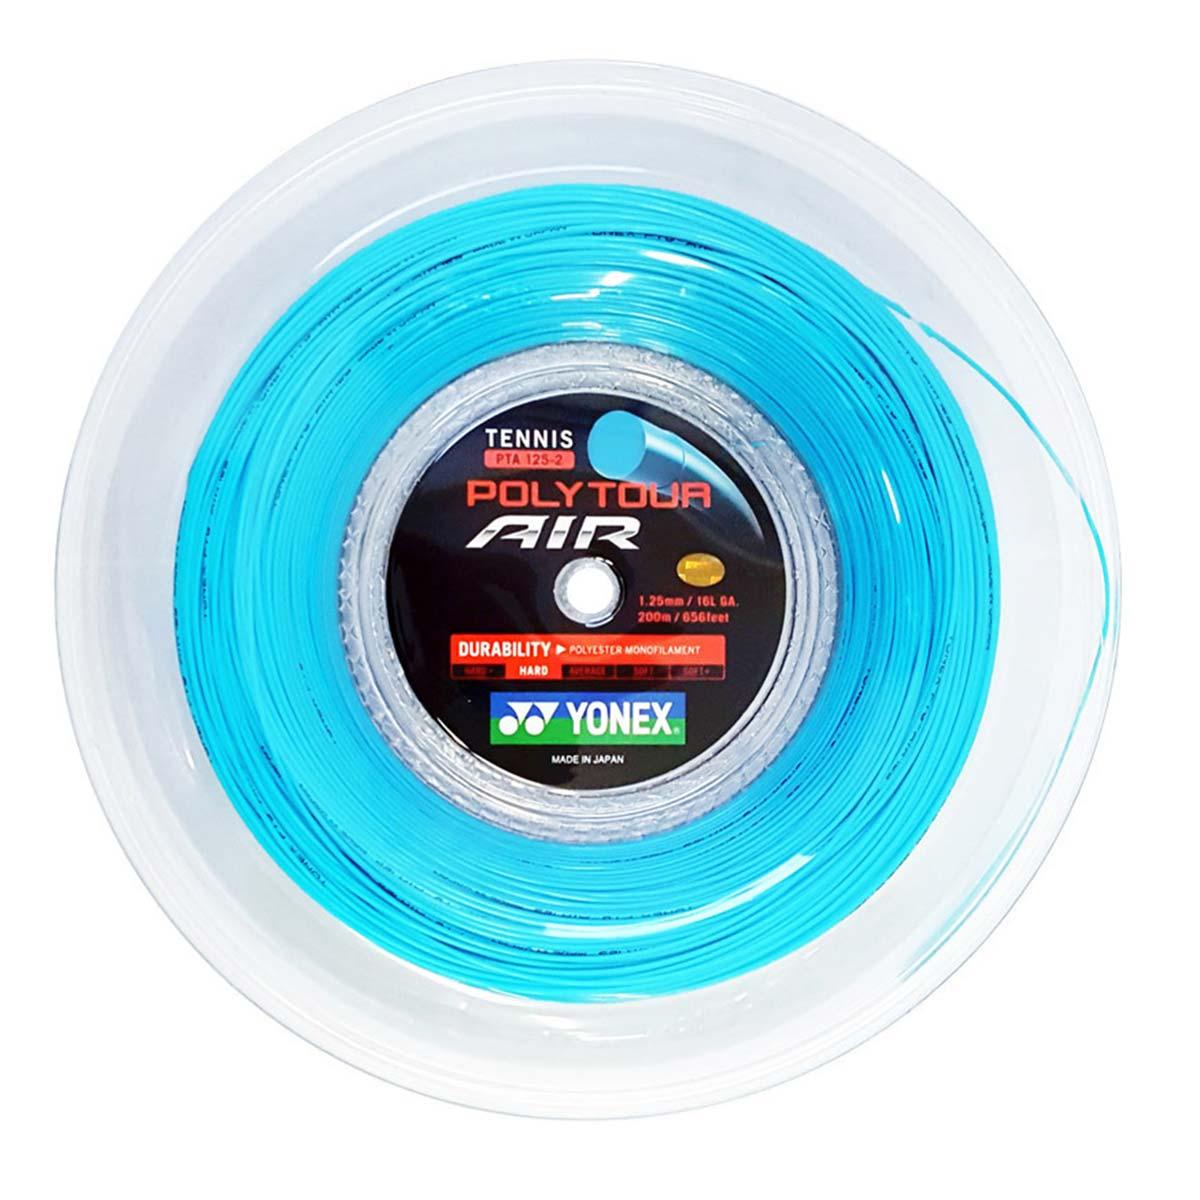 Yonex Poly Tour Air 125 Tennis String Reel (200m, Blue)